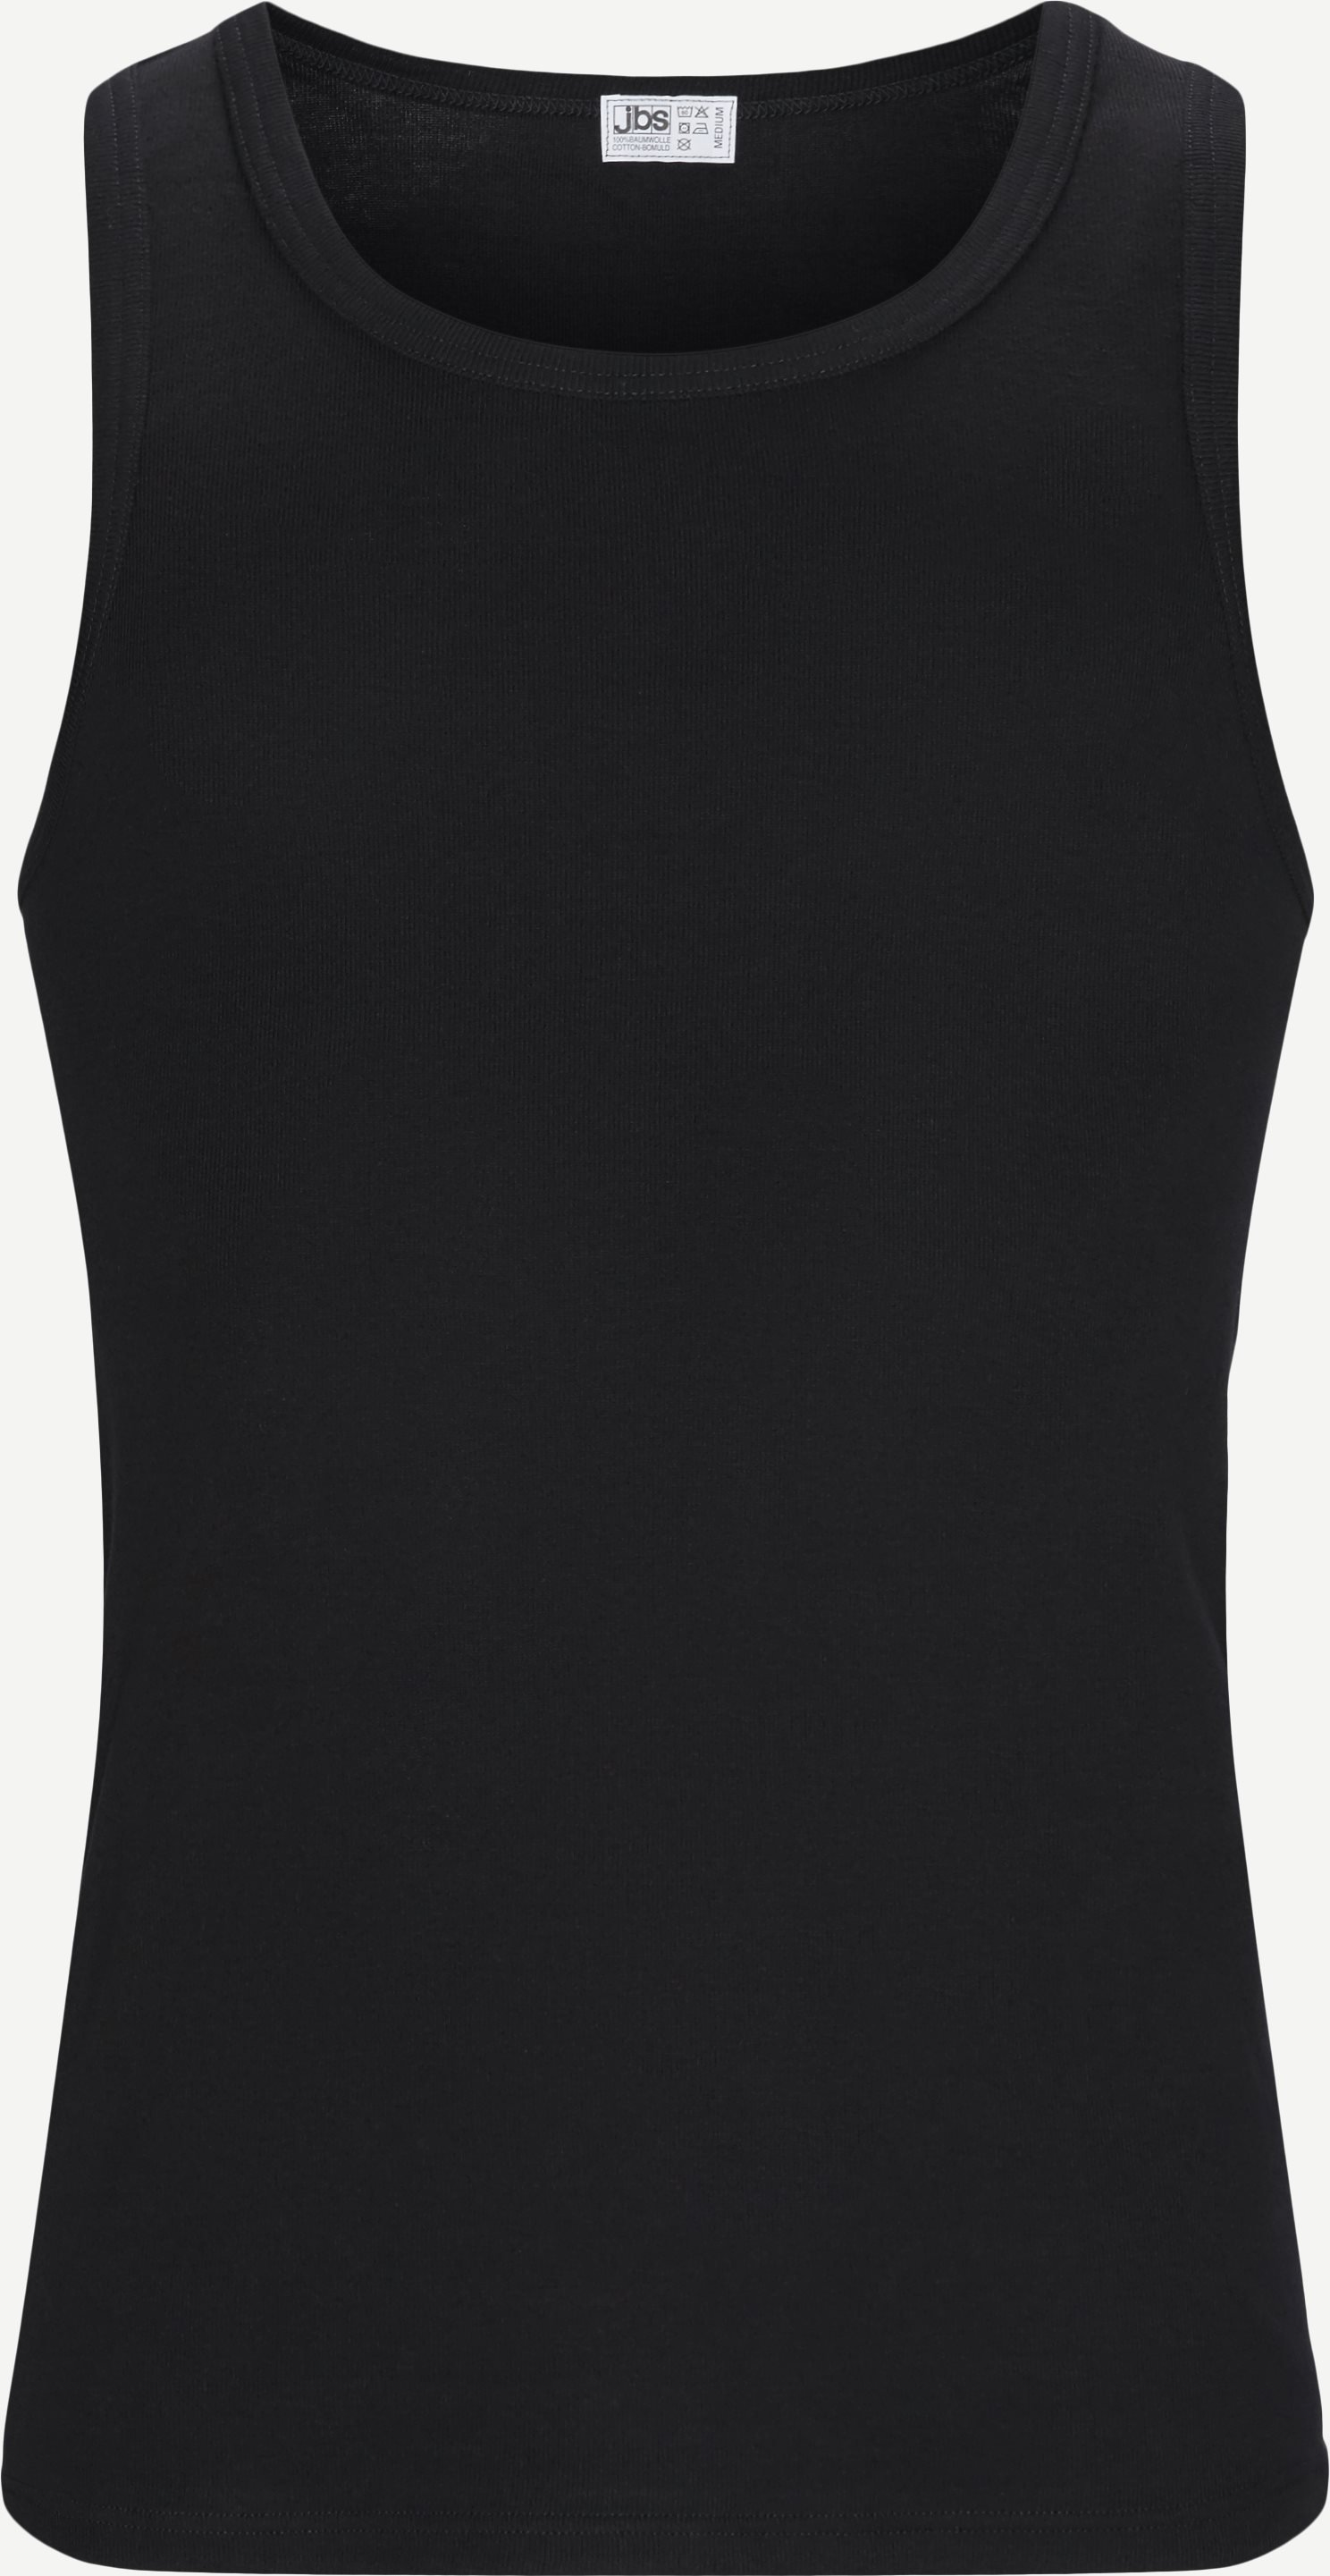 Singlet Original Undershirt - Underwear - Regular fit - Black